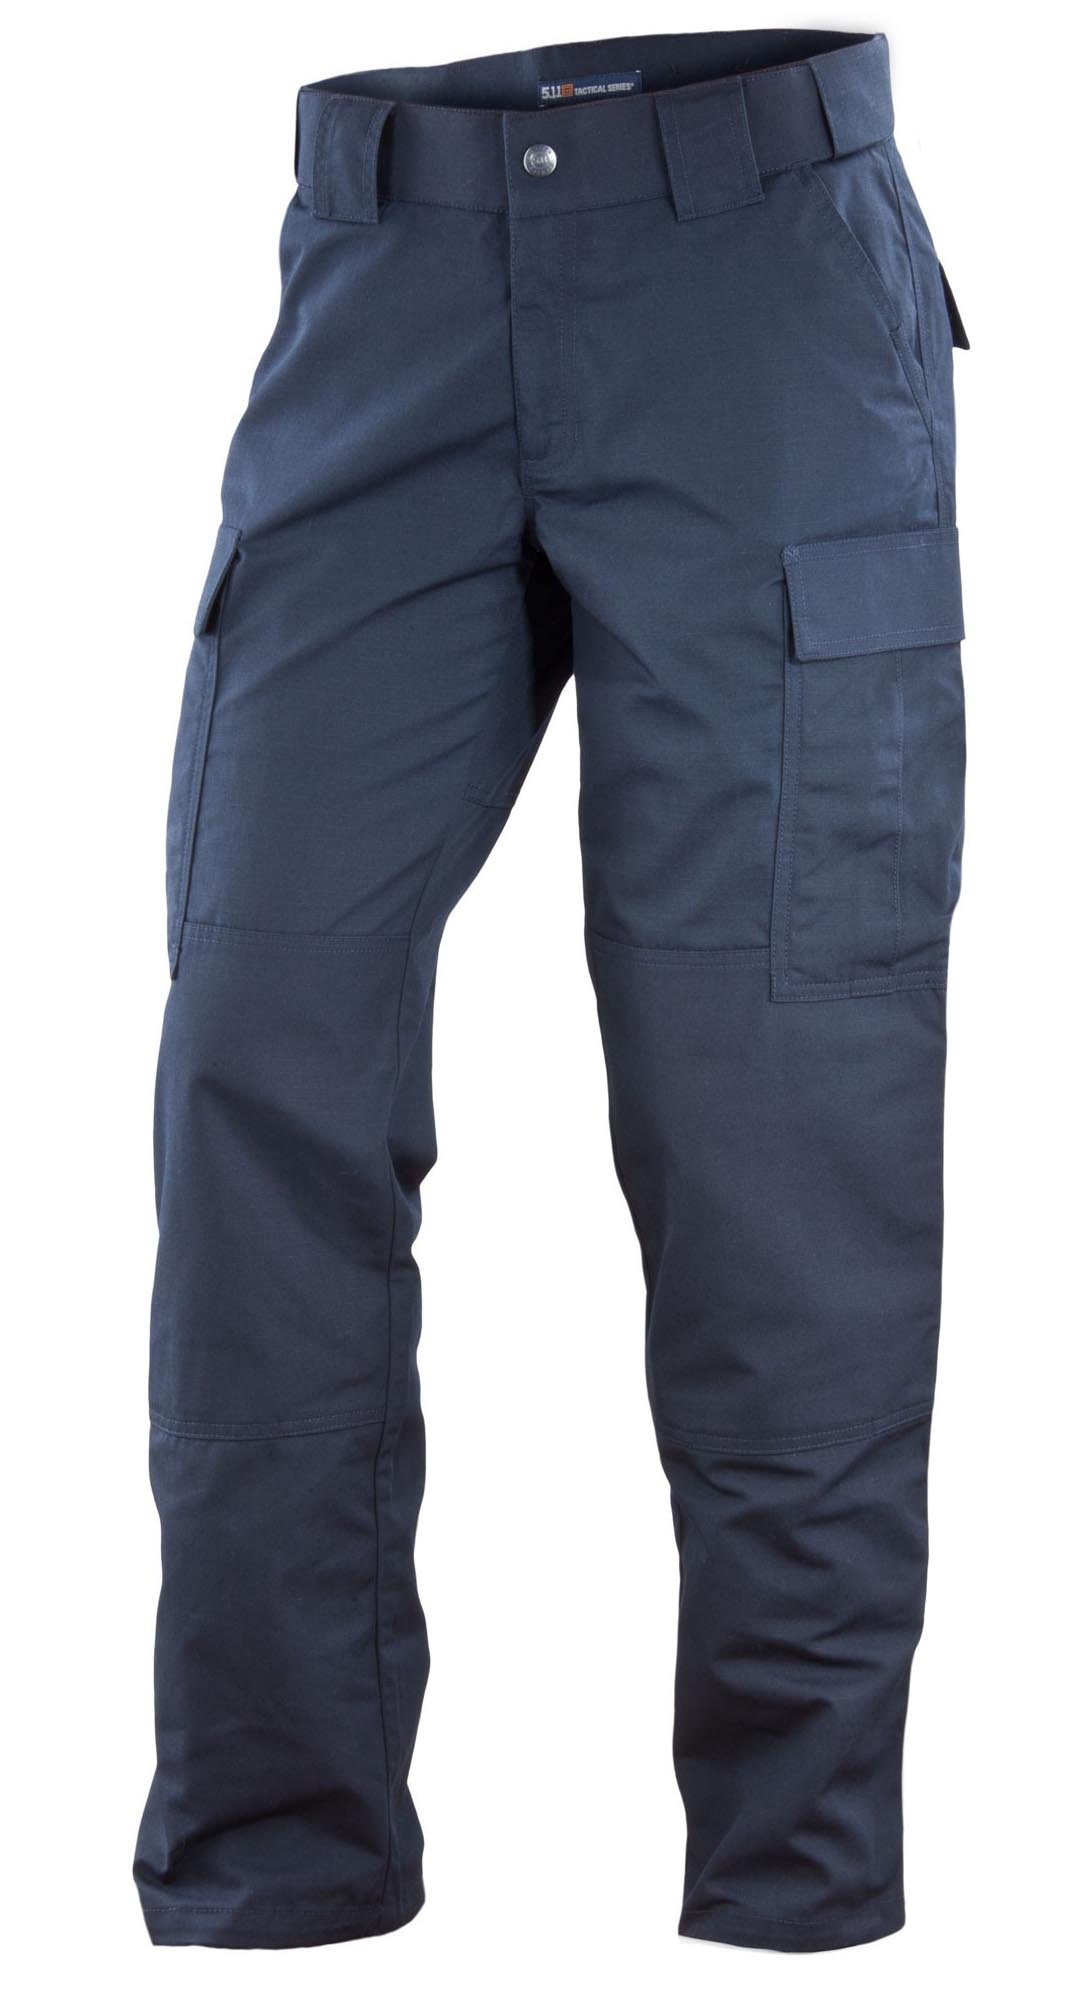 5.11 Tactical Women's Triple-Stitching TDU Ripstop Uniform Operator Pants, Style 64359